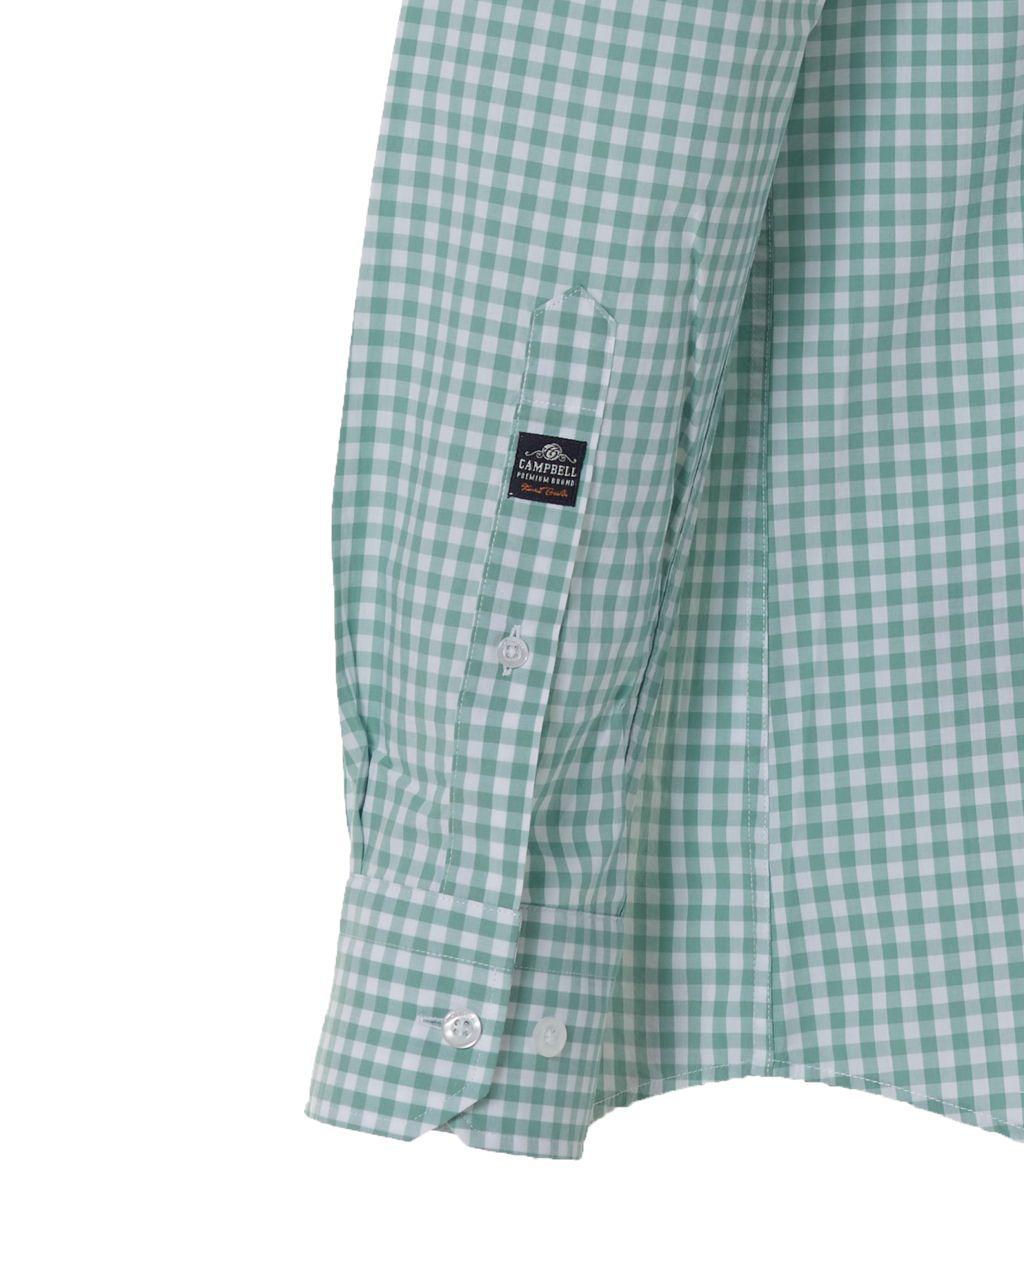 Campbell Classic Overhemd LM Mint kleine ruit 071708-008-L